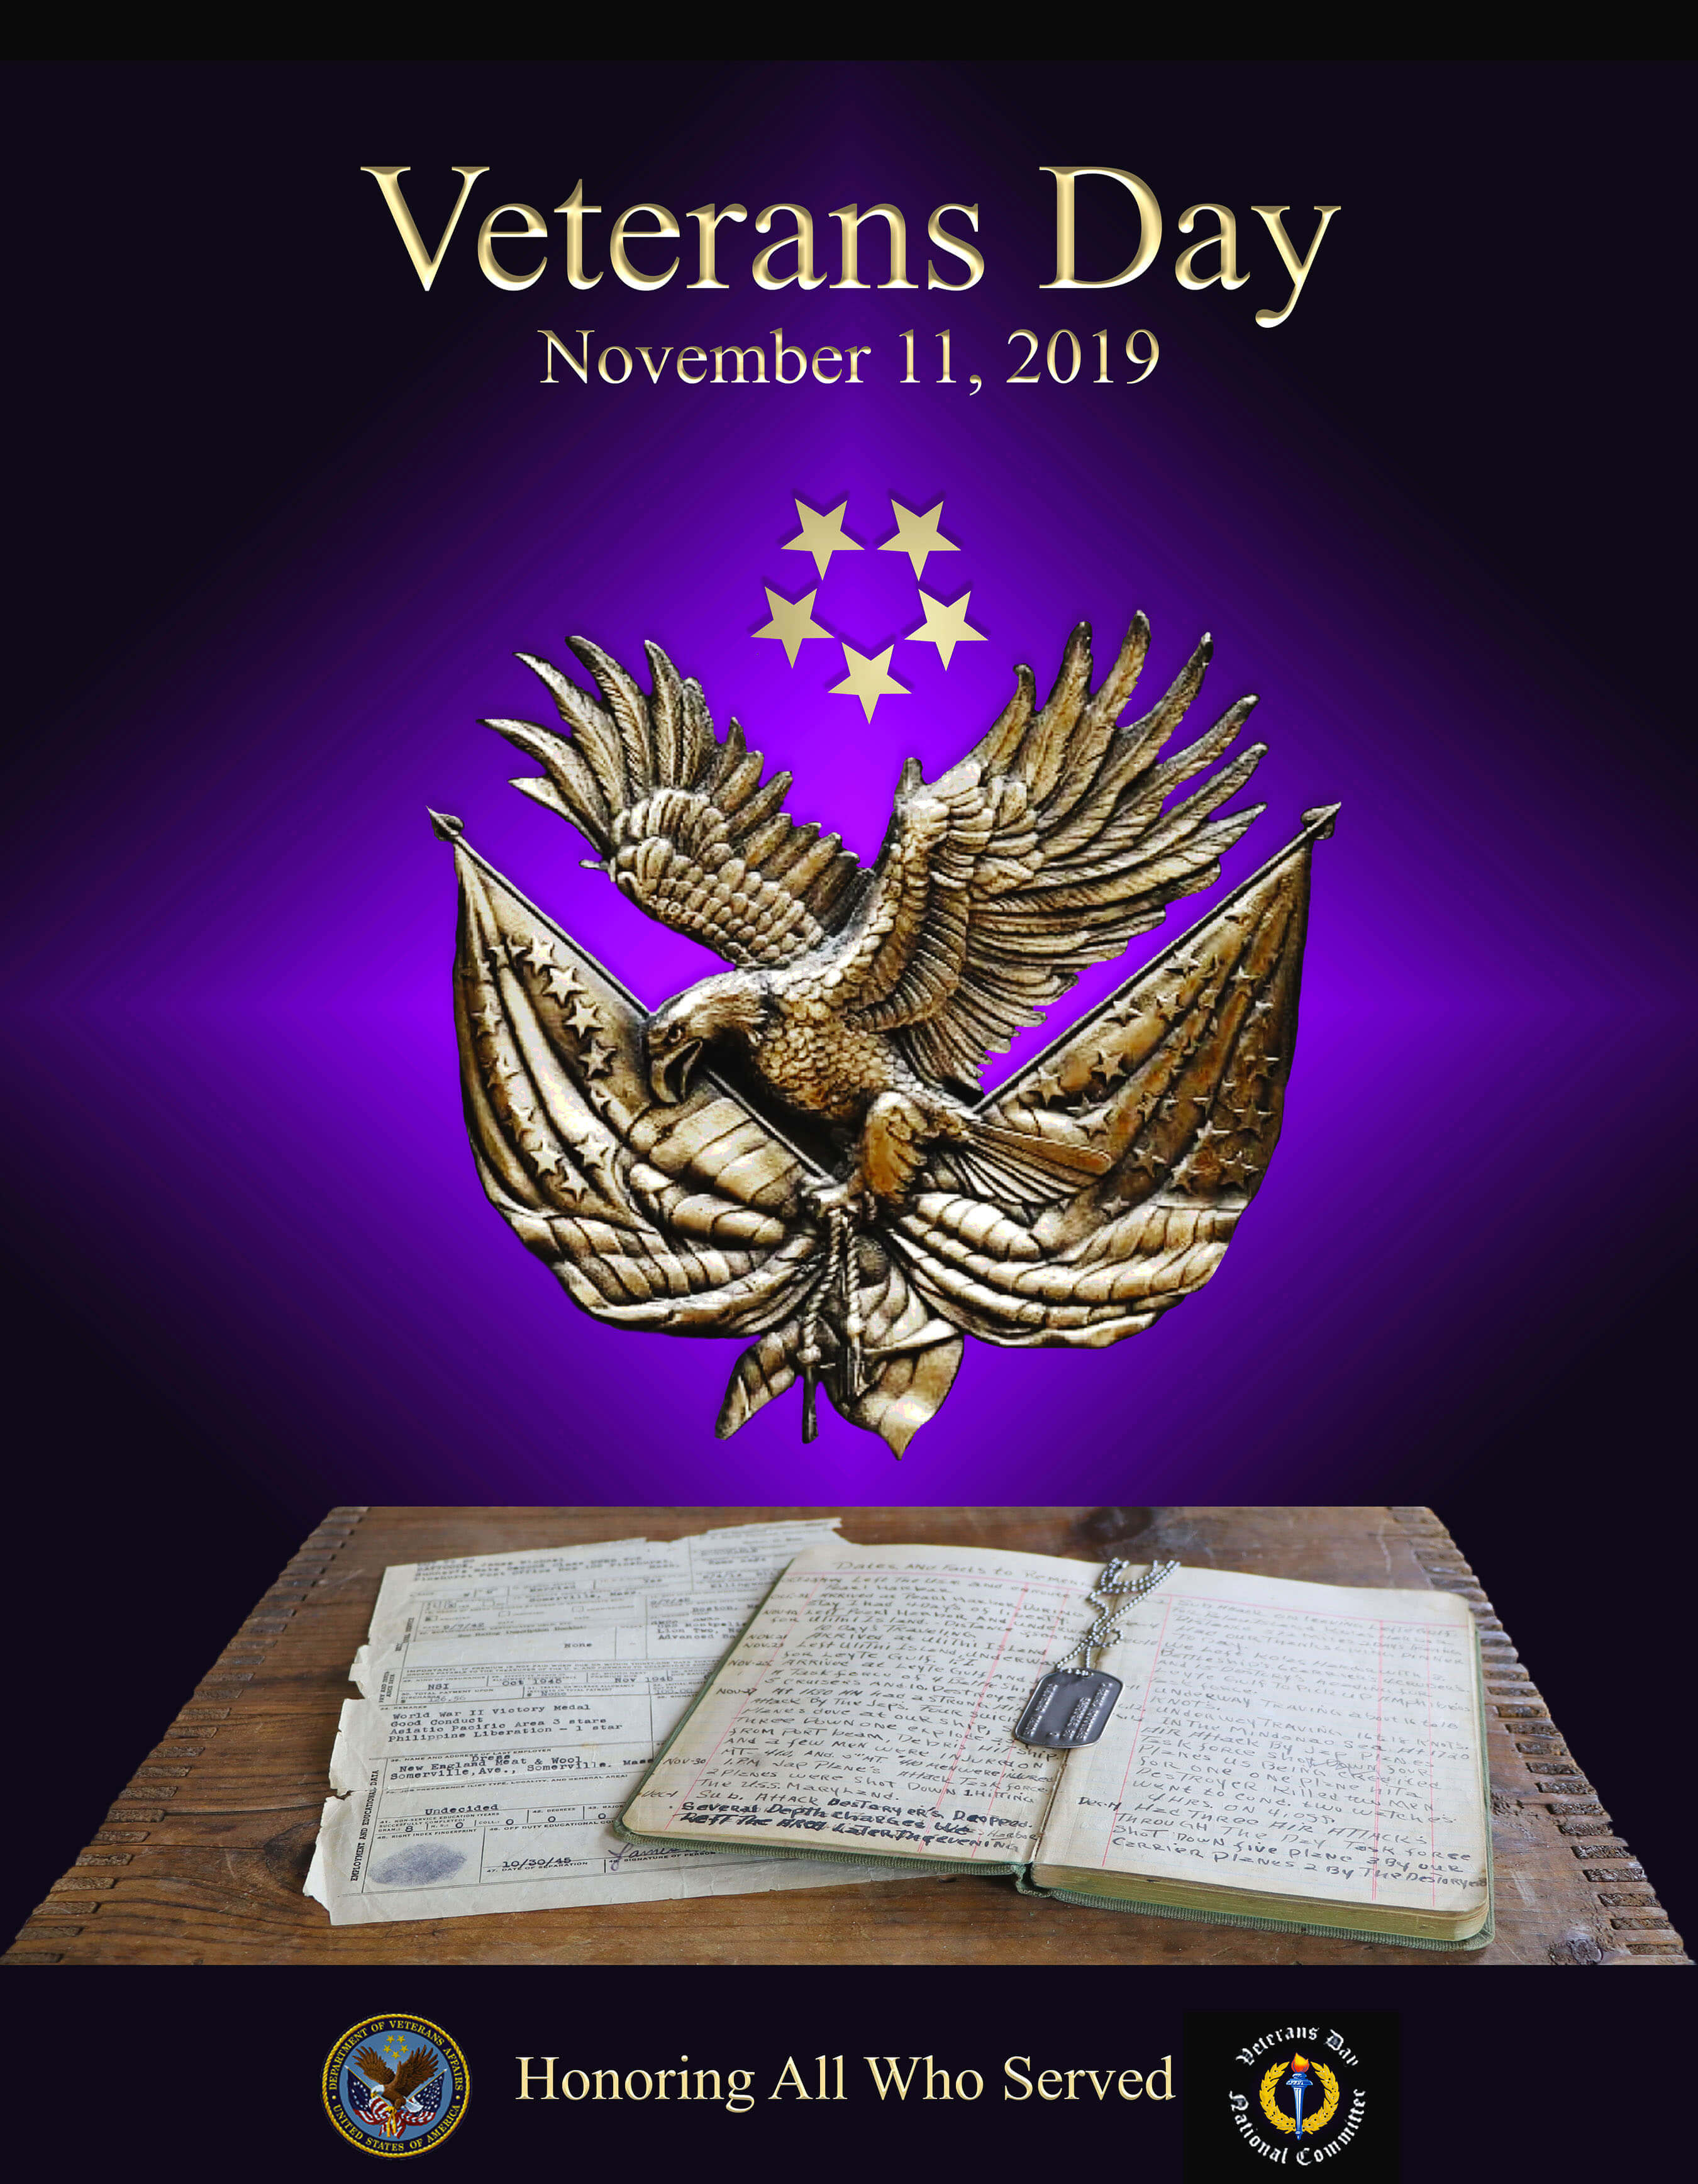 Veterans Day Images 2019 - HD Wallpaper 